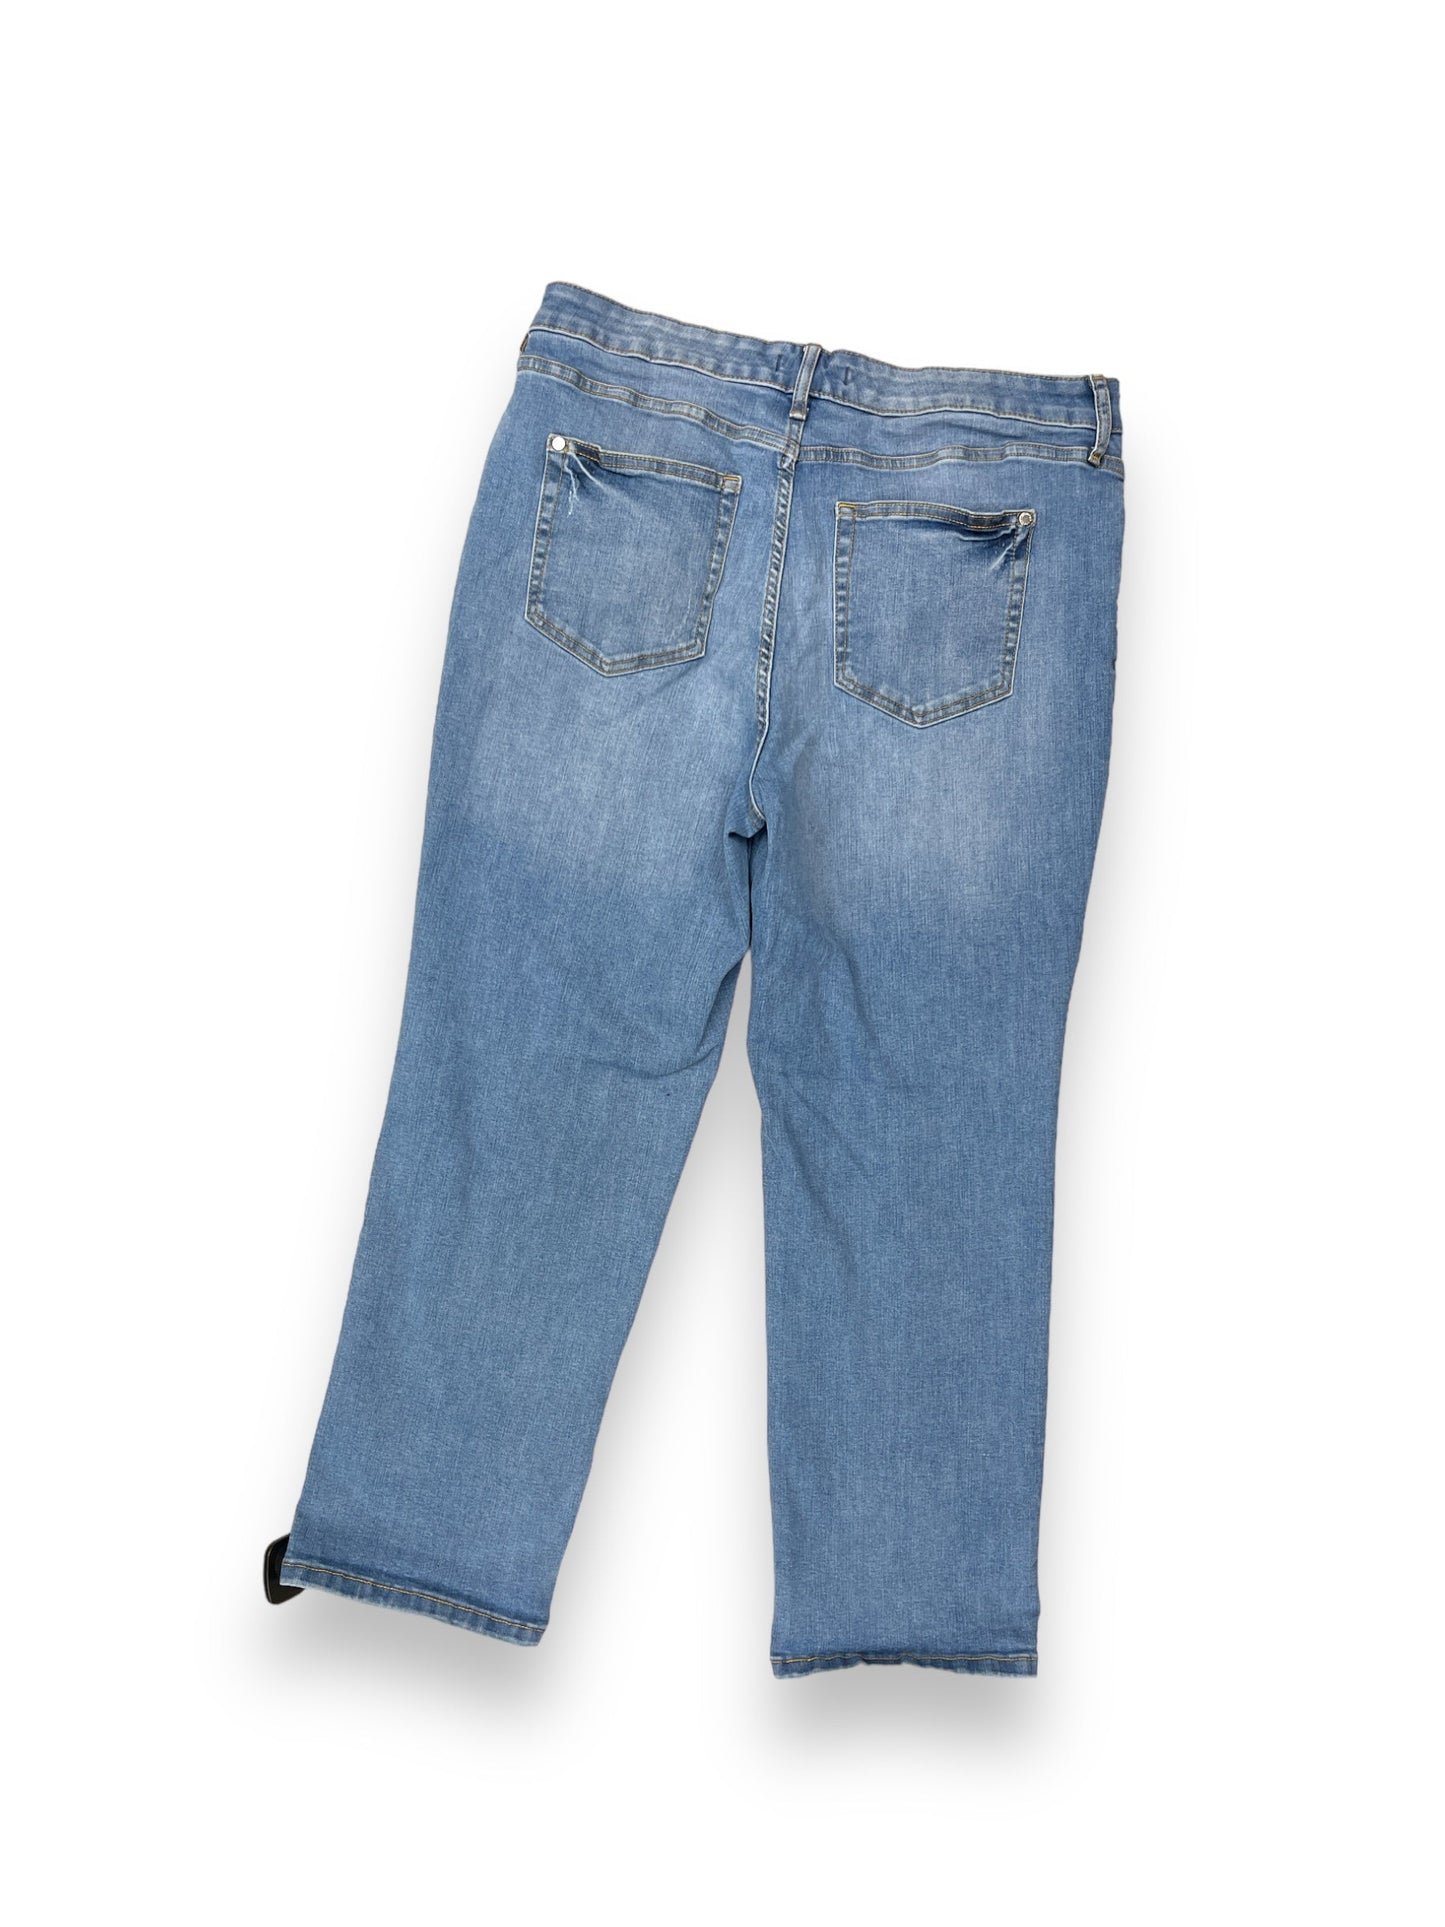 Jeans Cropped By Jennifer Lopez  Size: 14